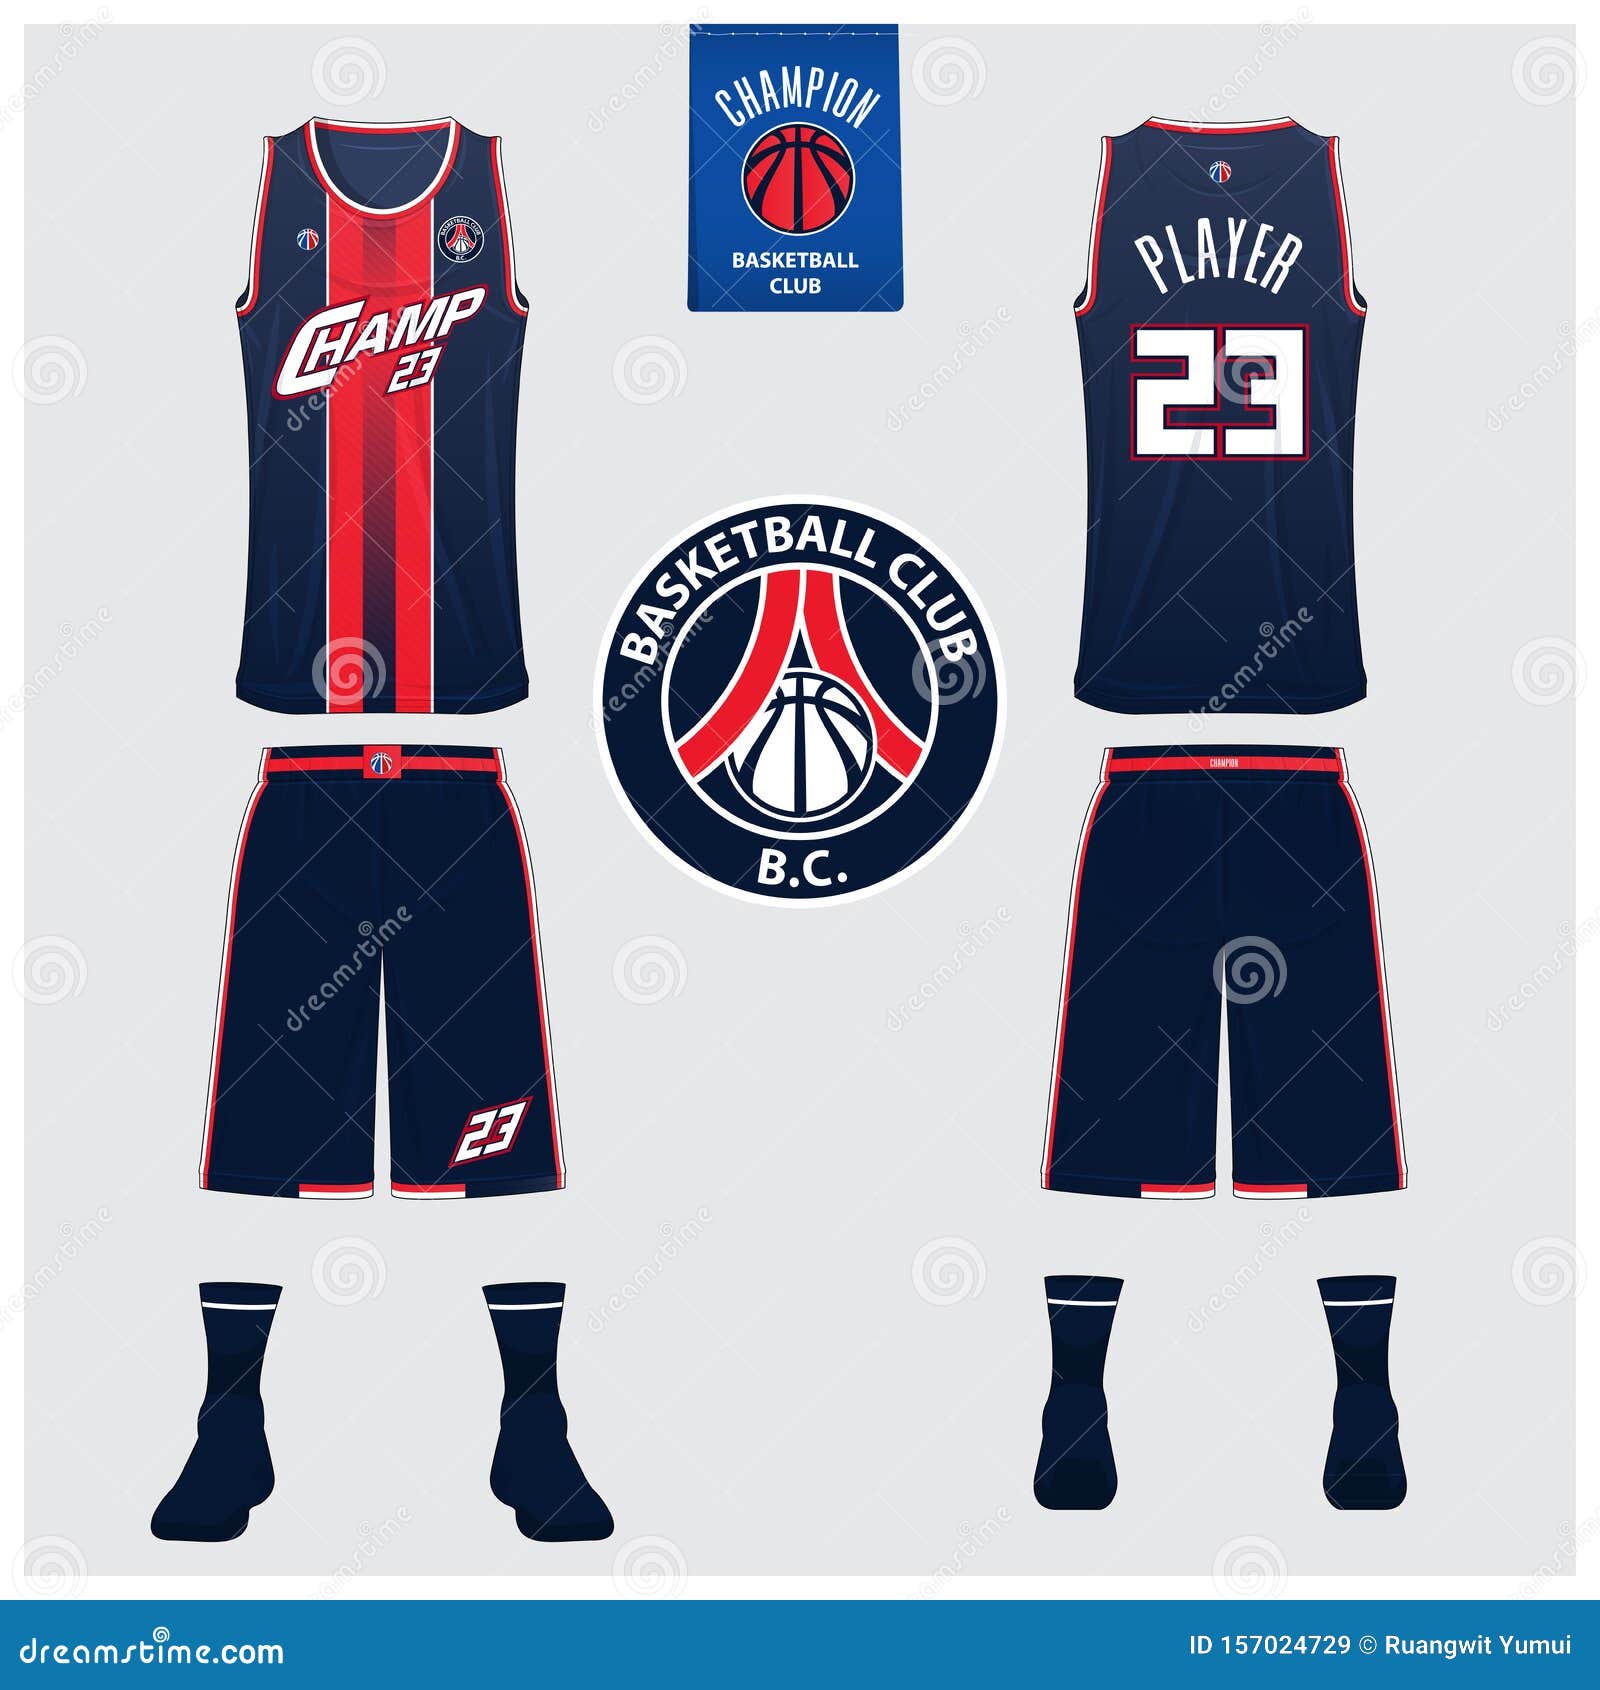 Download Basketball Uniform Mockup Template Design For Basketball ...